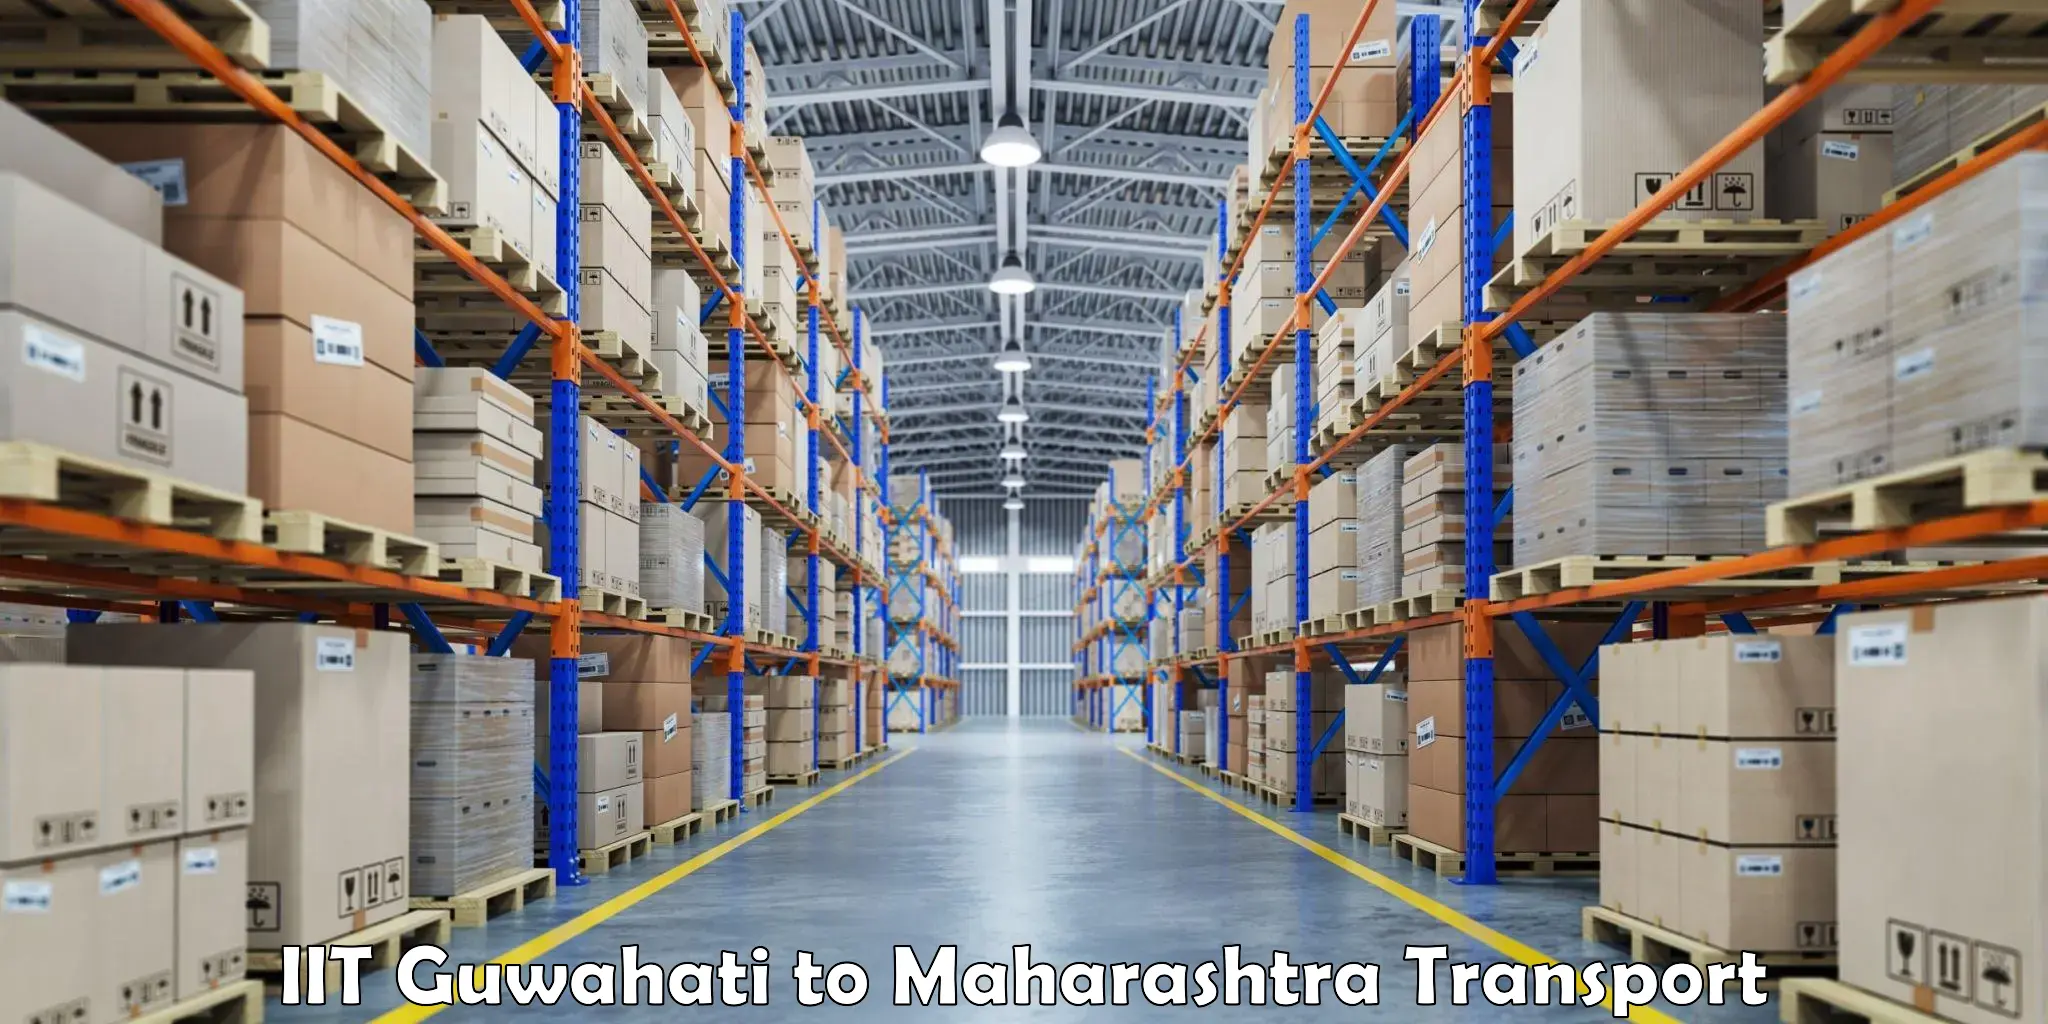 Furniture transport service IIT Guwahati to Maharashtra